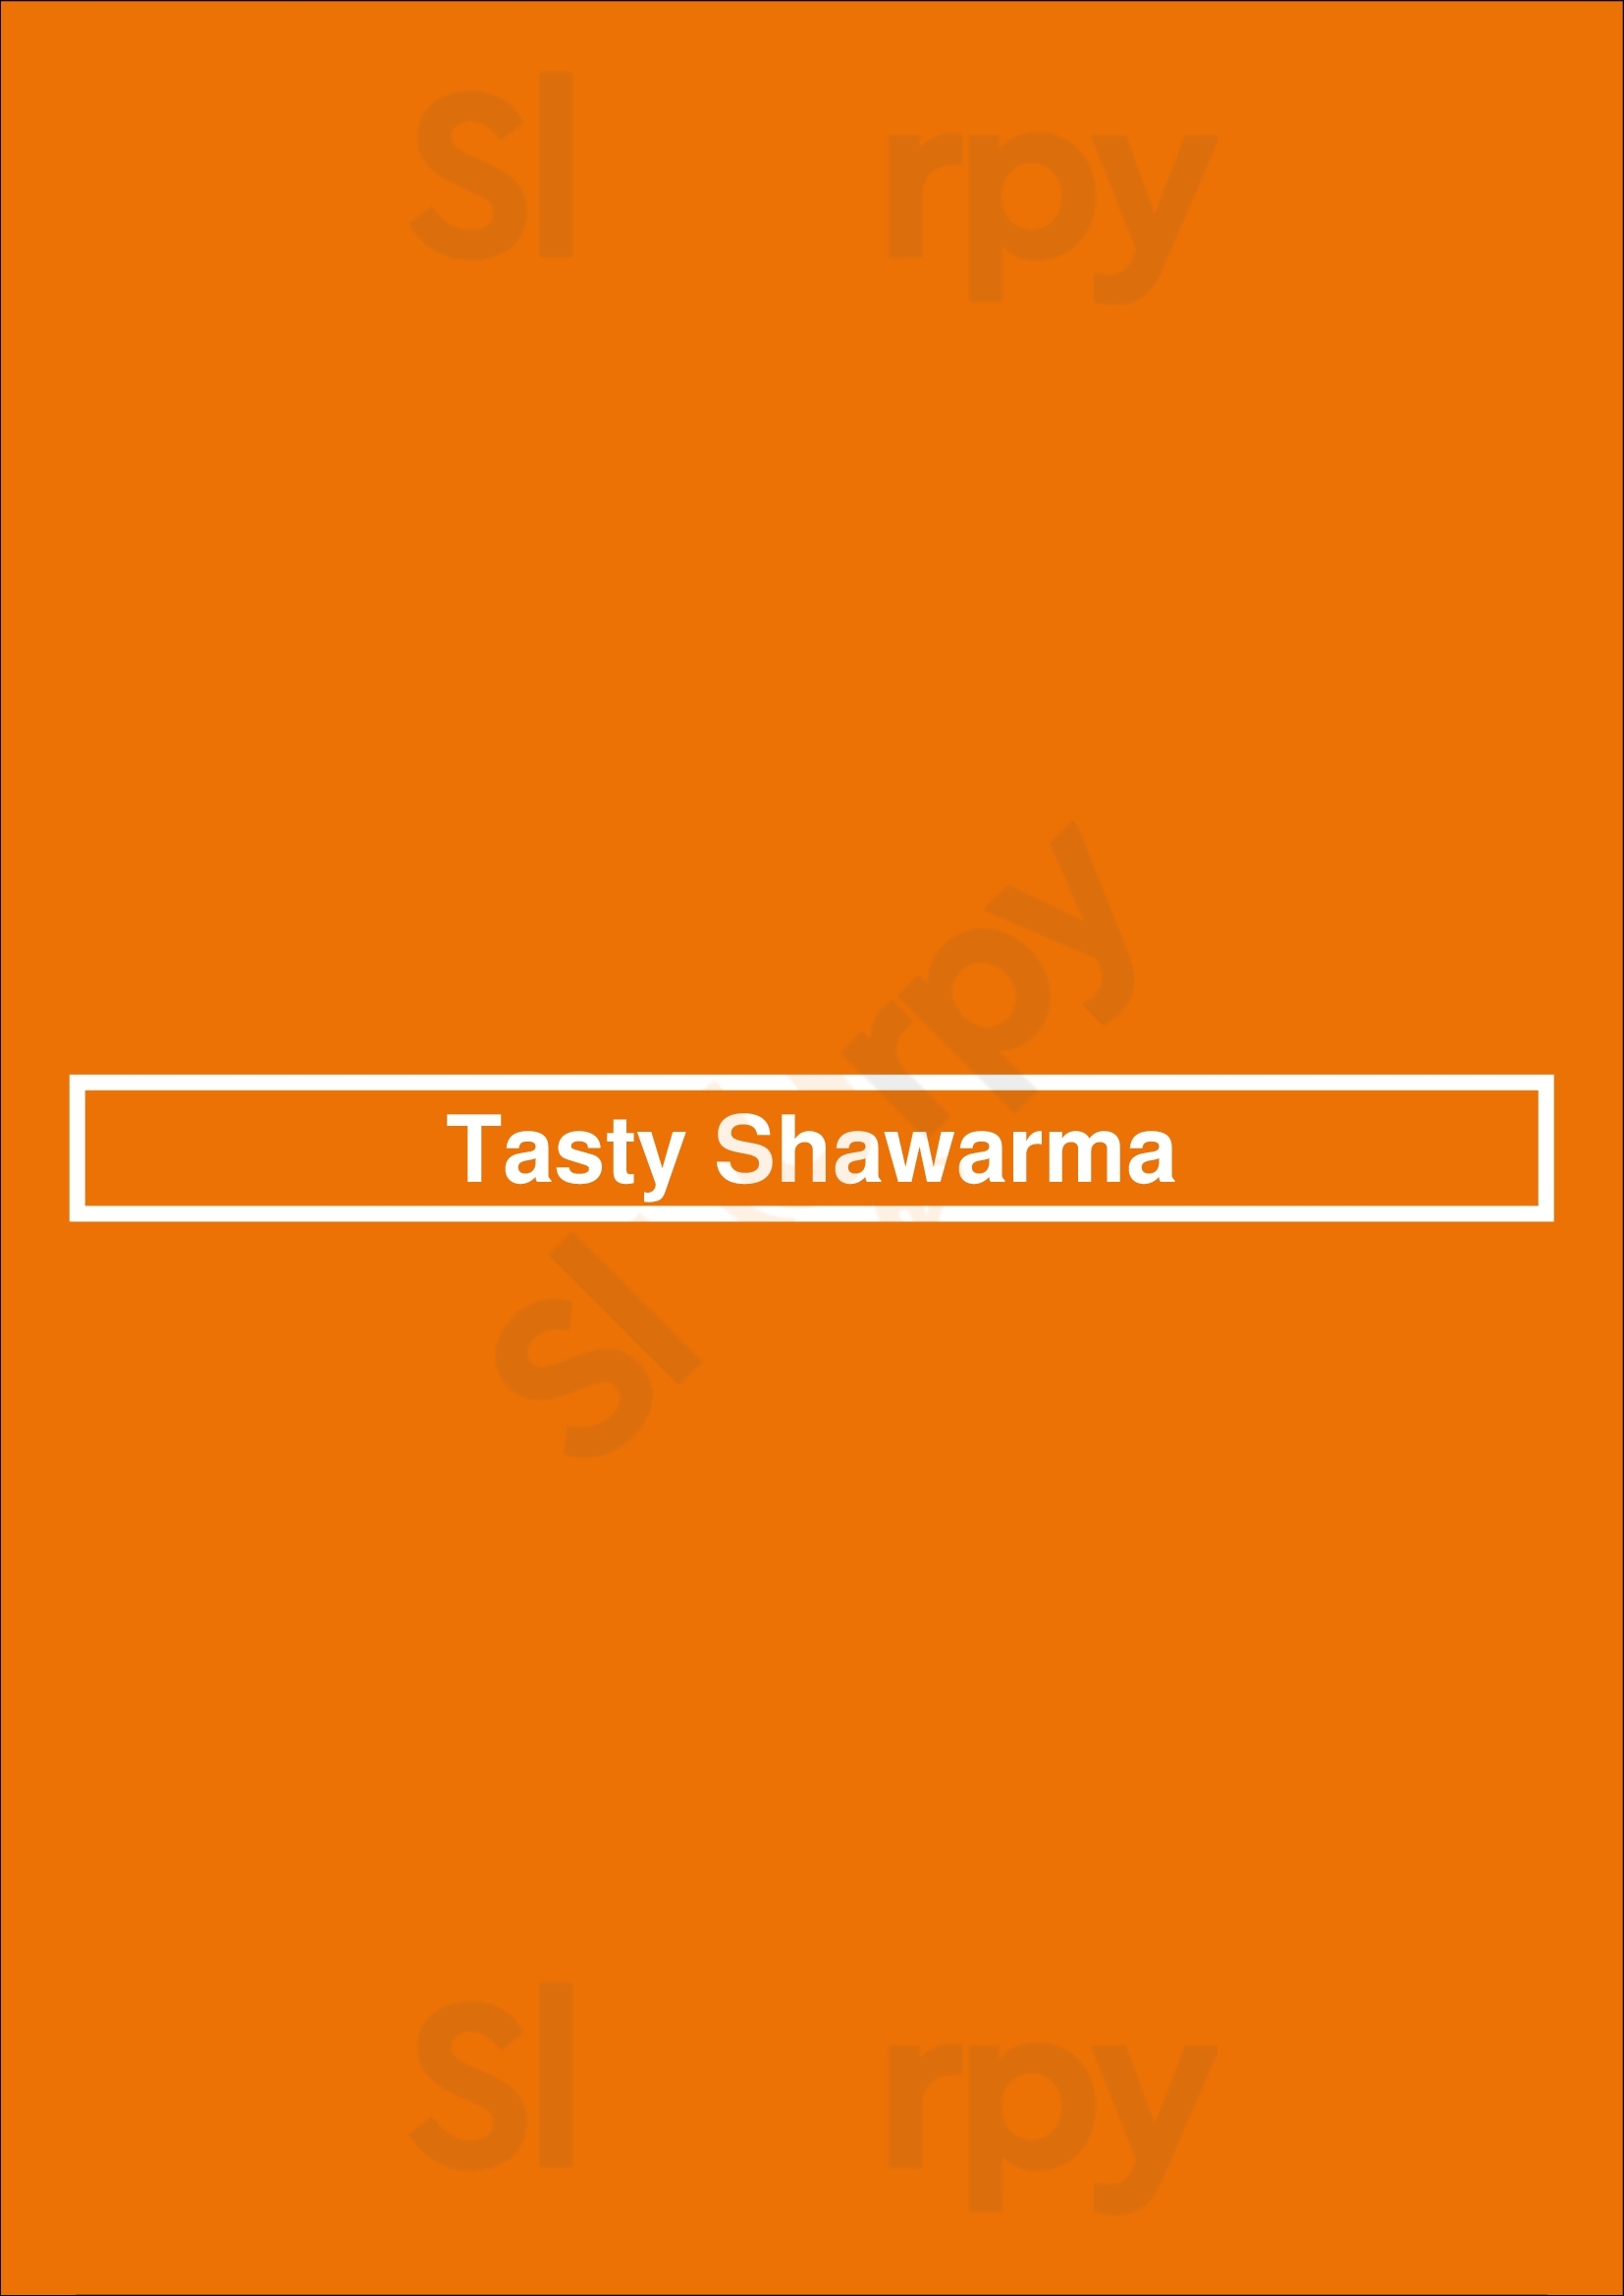 Tasty Shawarma Markham Menu - 1